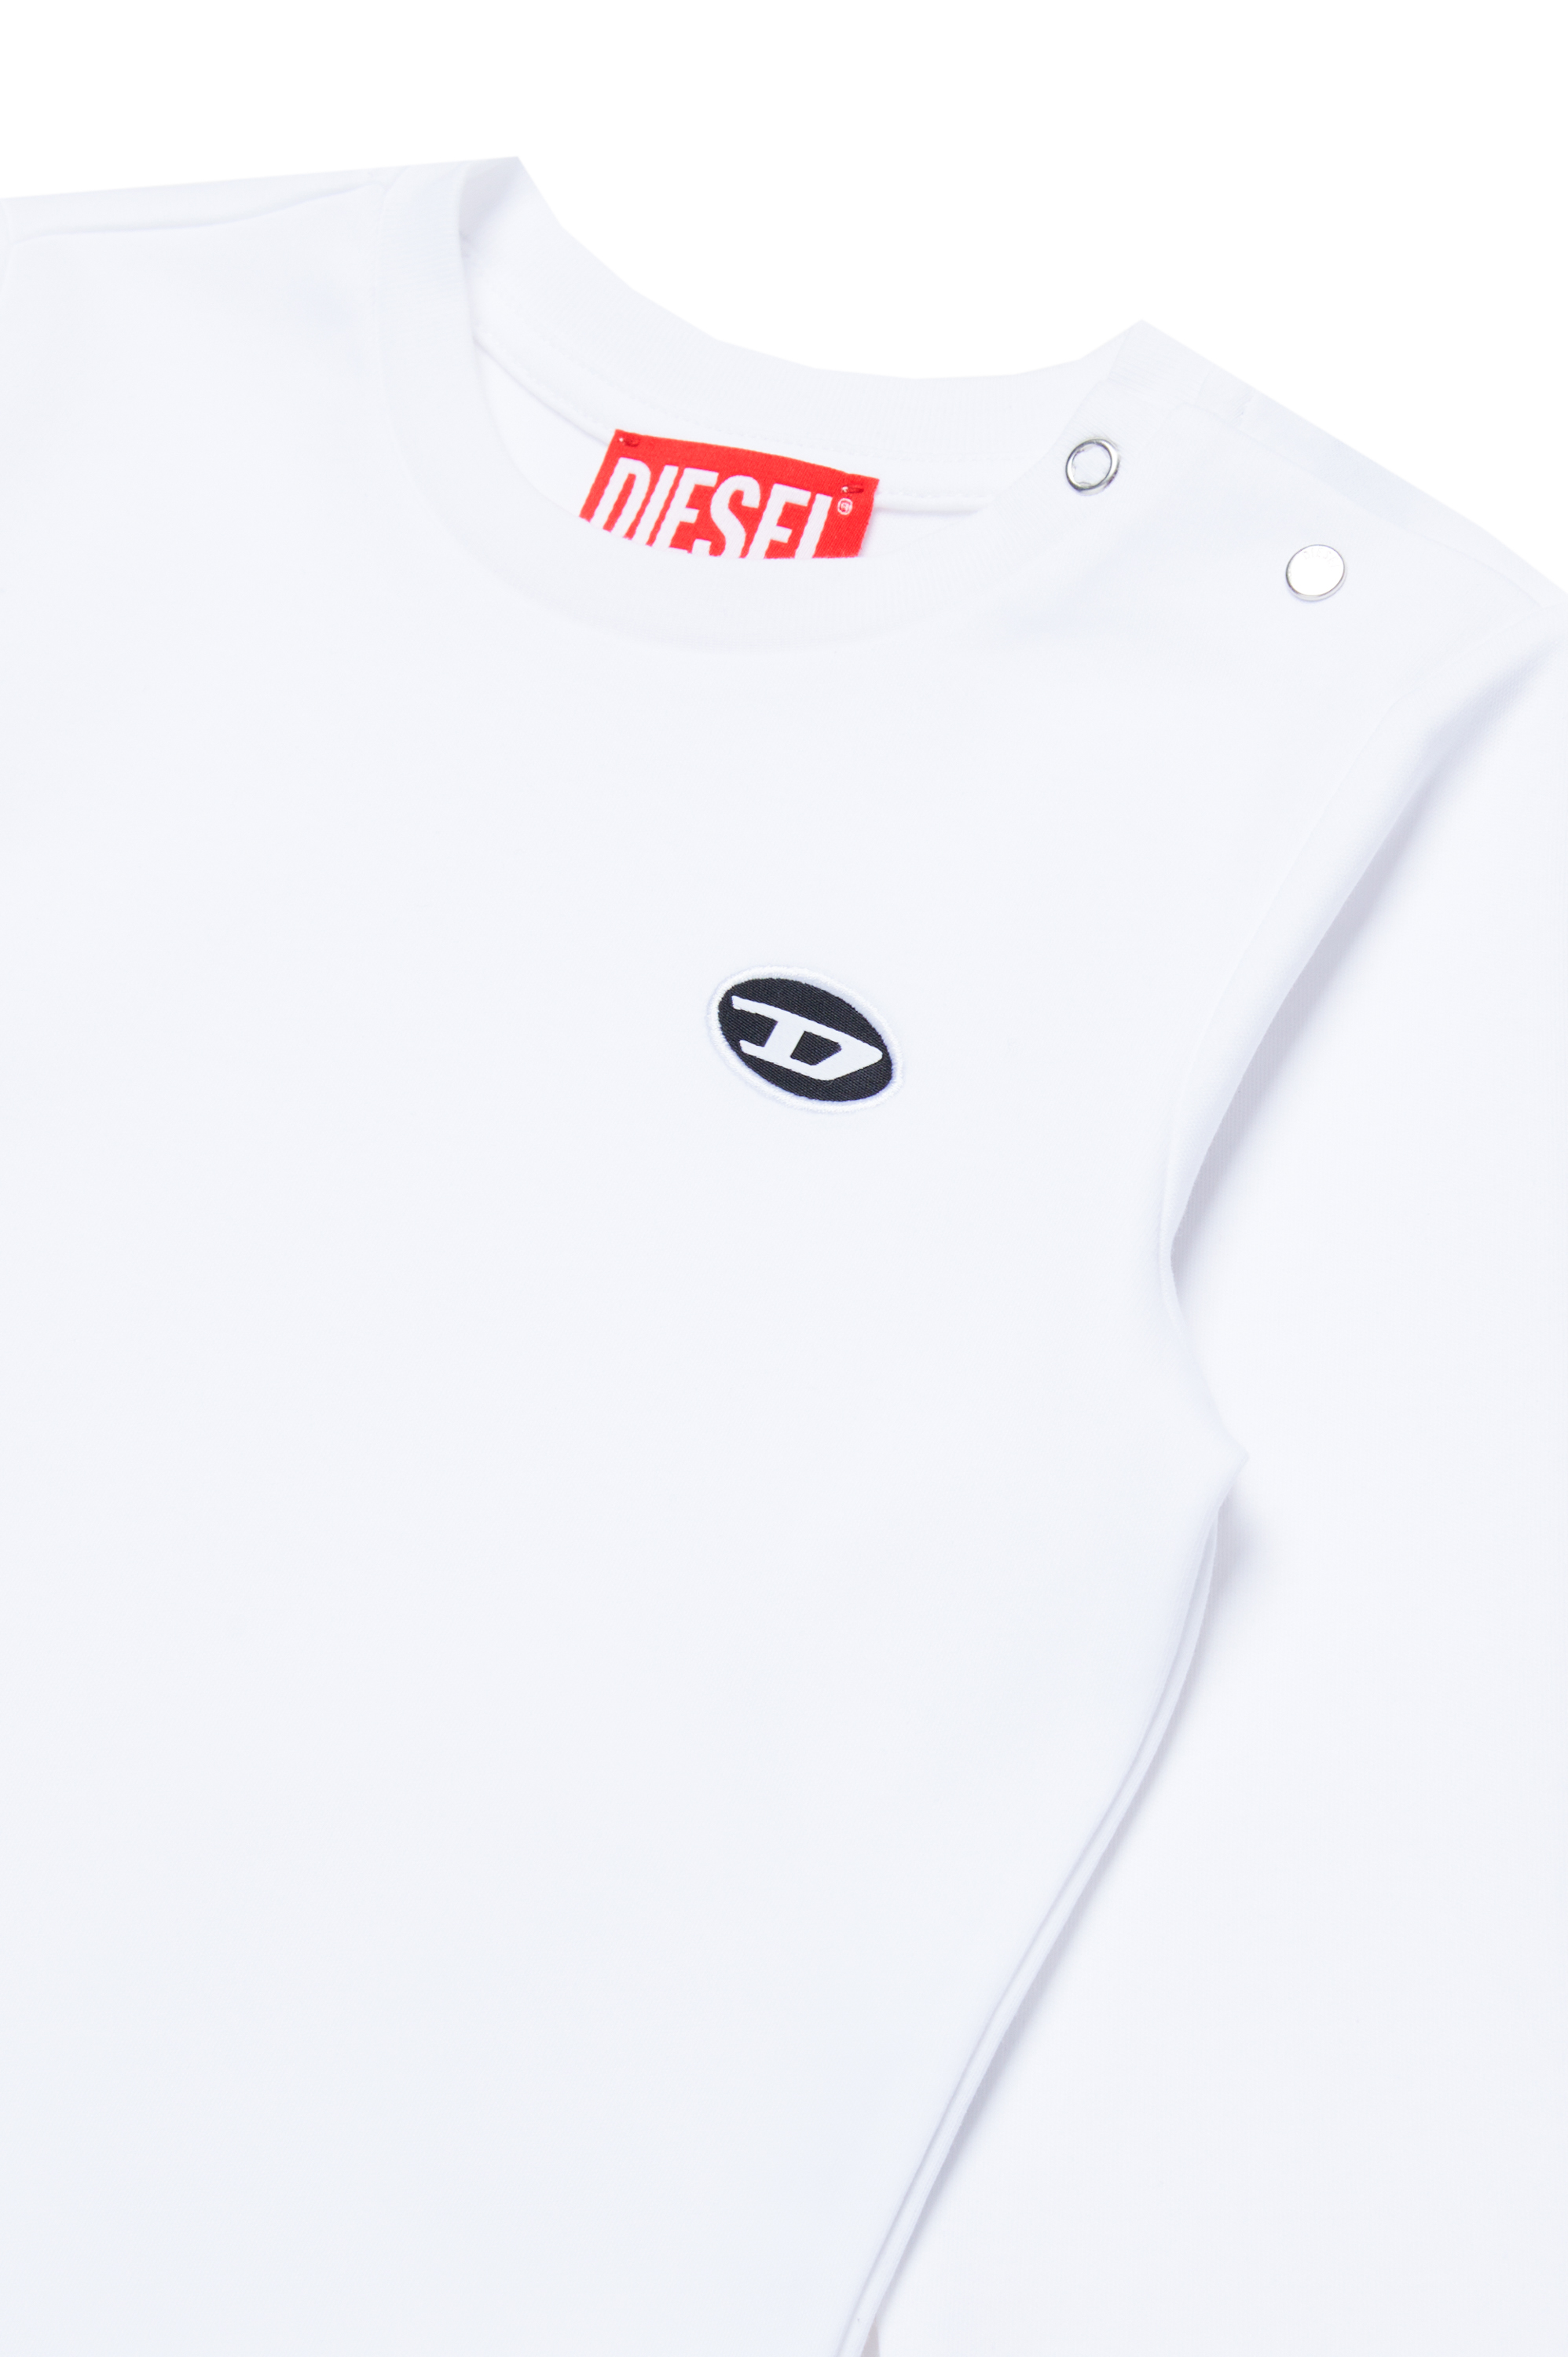 Diesel - TJUSTDOVALPJLSB, Man Long-sleeve T-shirt in organic cotton in White - Image 3